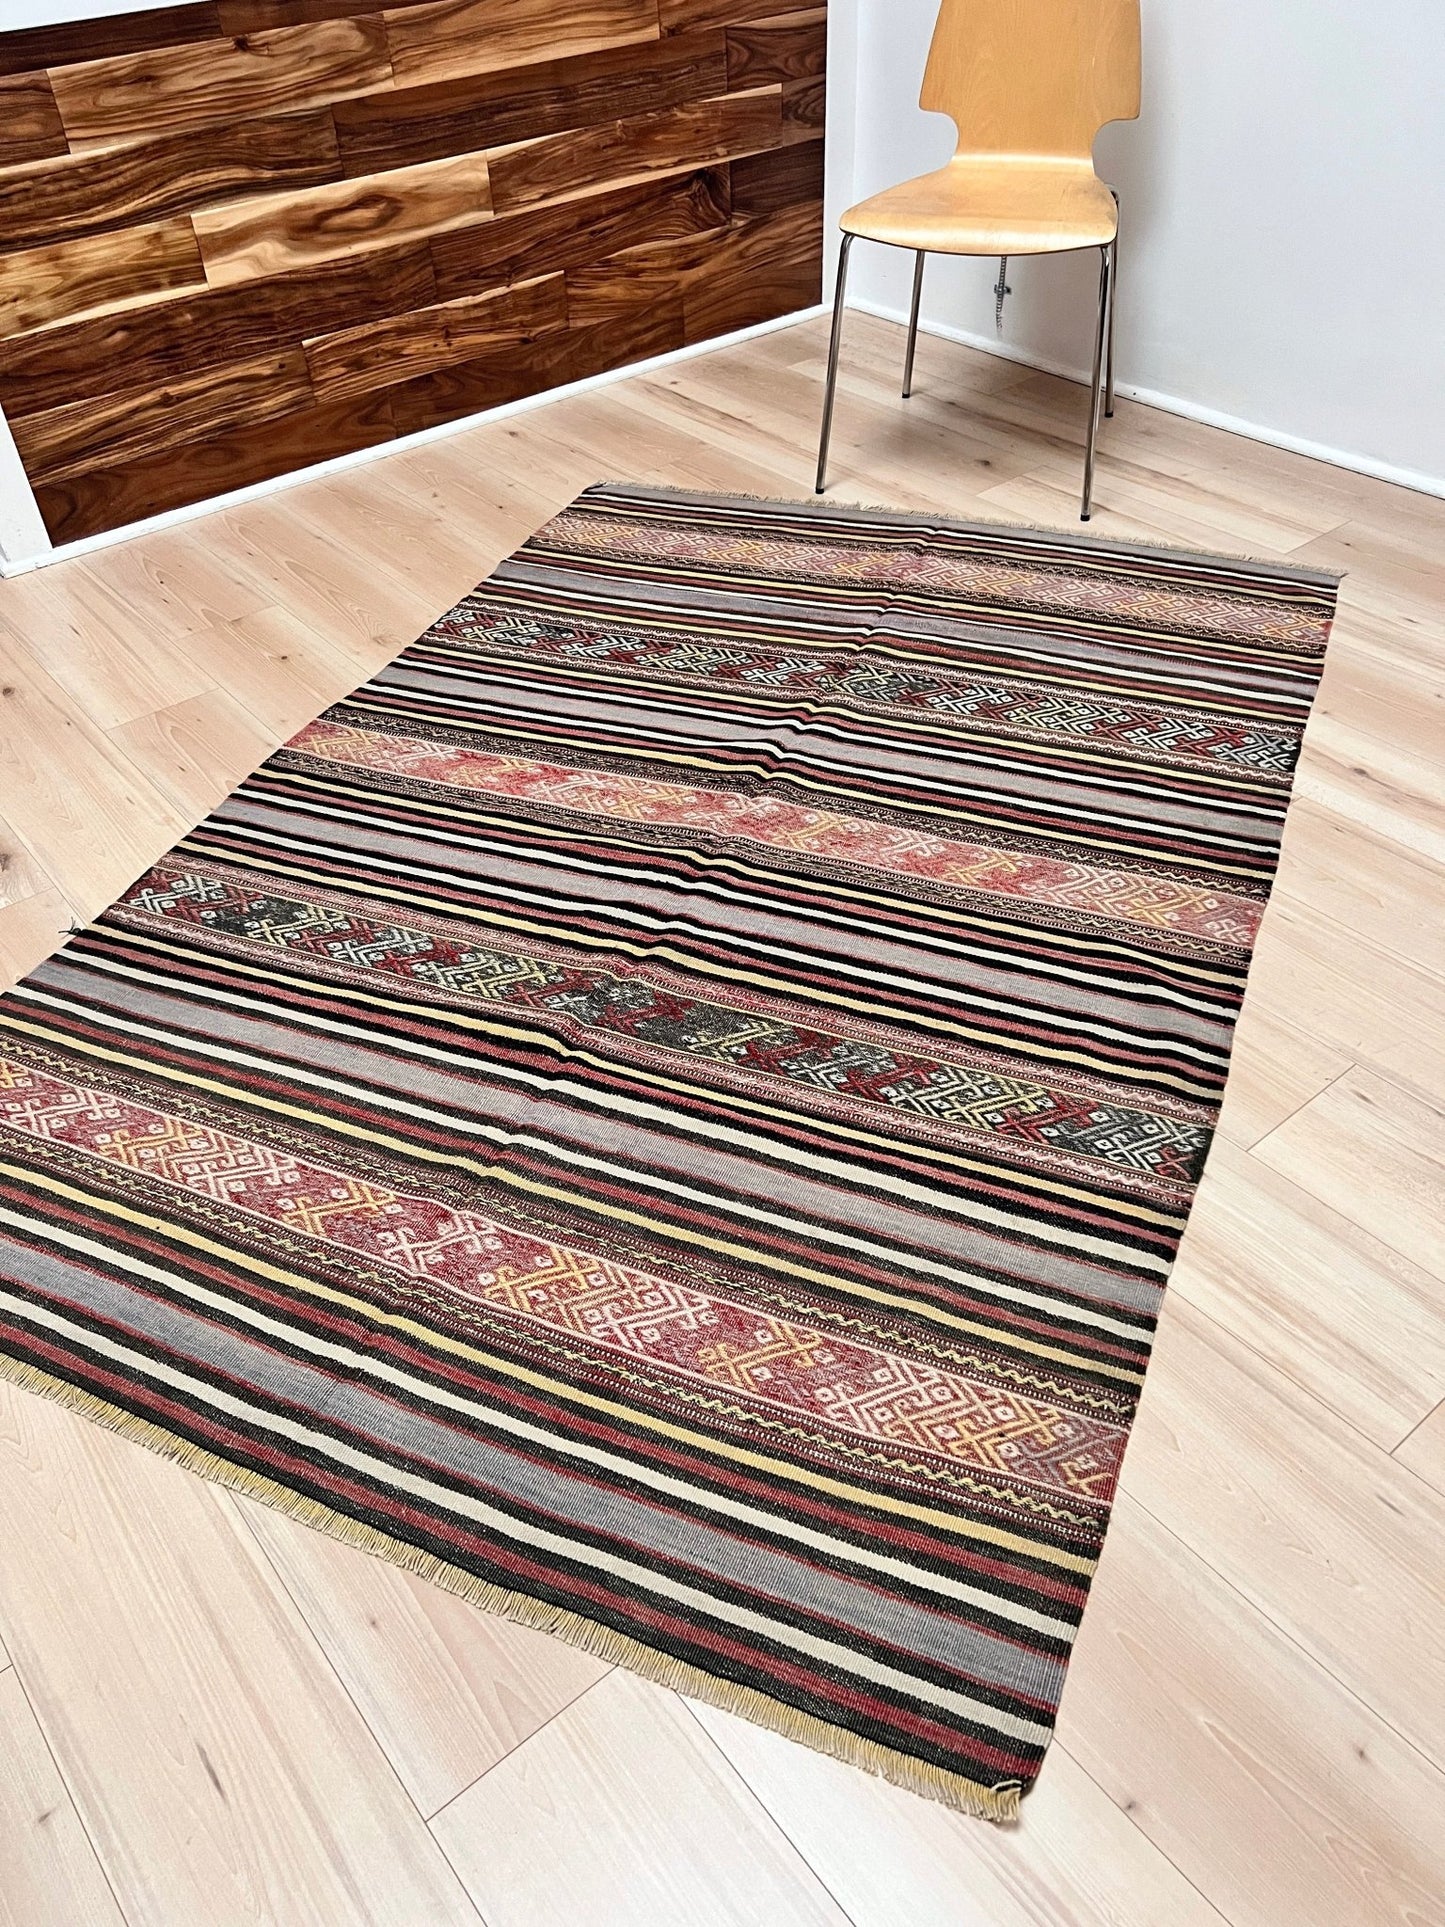 Milas vintage turkish kilim rug shop san francisco bay area. Buy rug online. Vintage rug shop portland, seattle, berkeley.